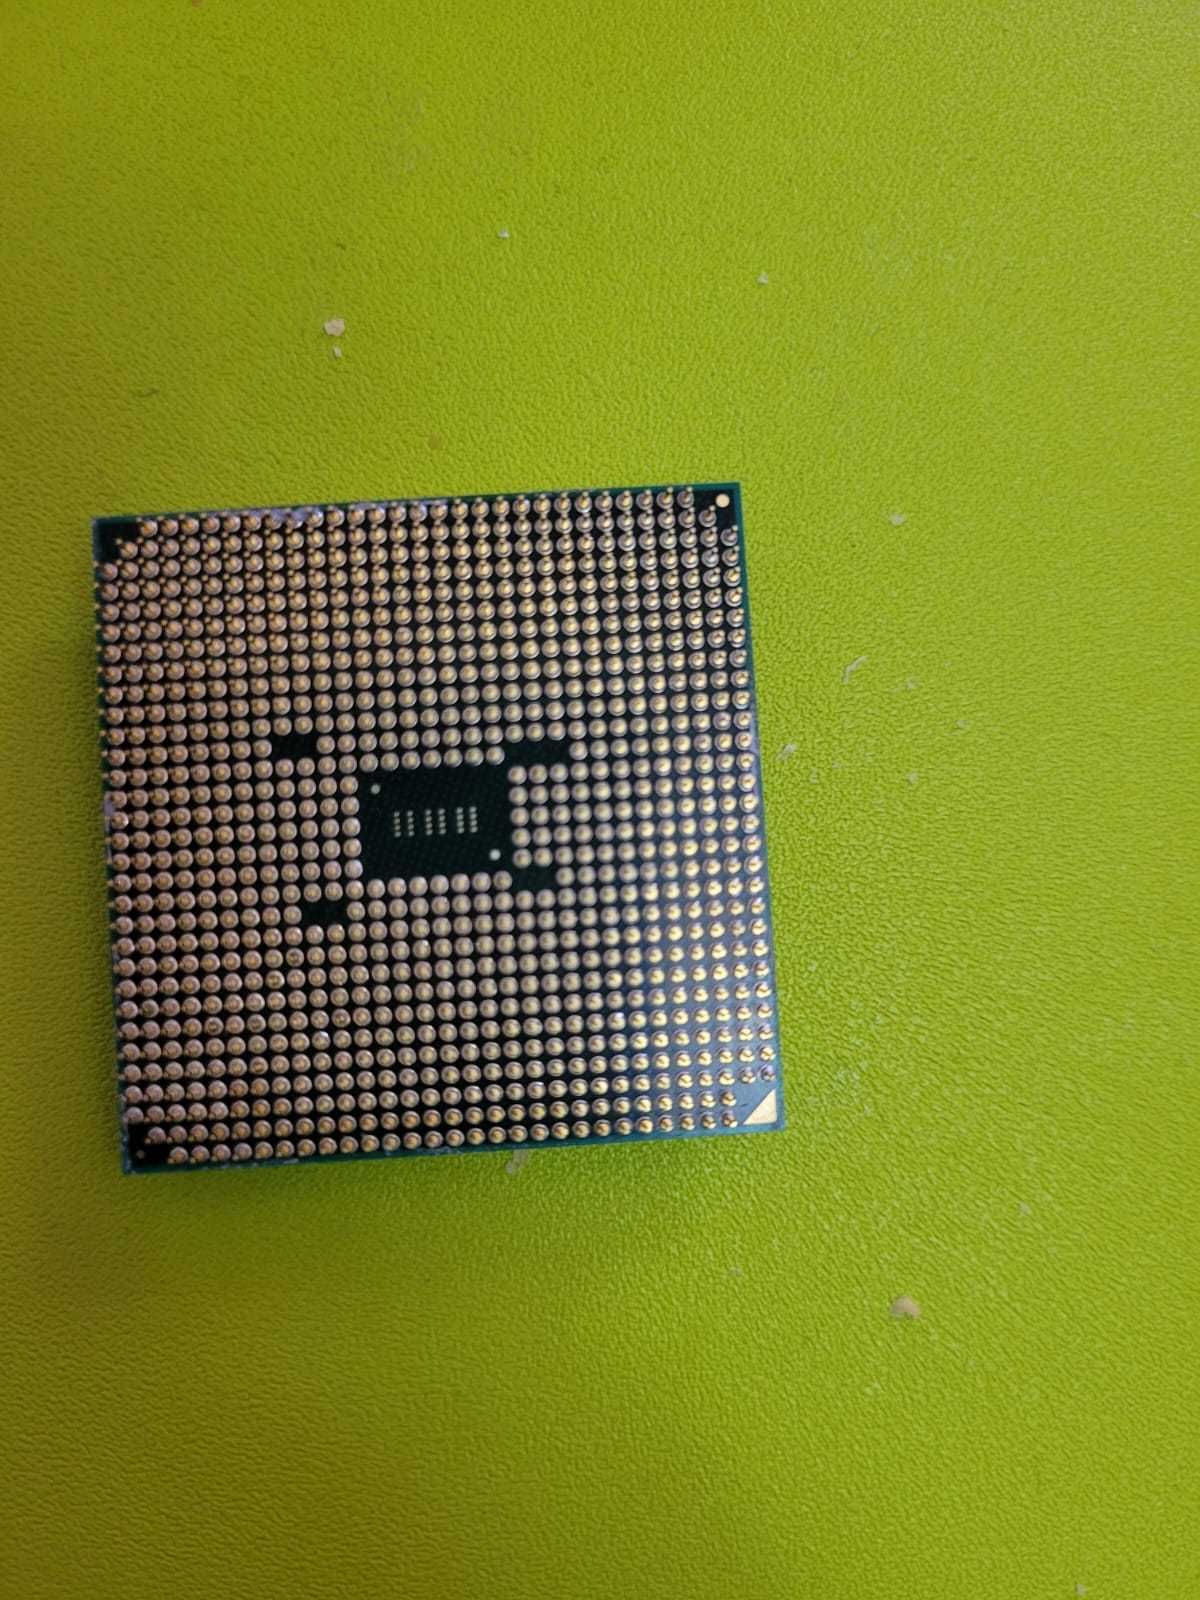 Procesor AMD A10 6700 Series 3.7 Ghz turbo